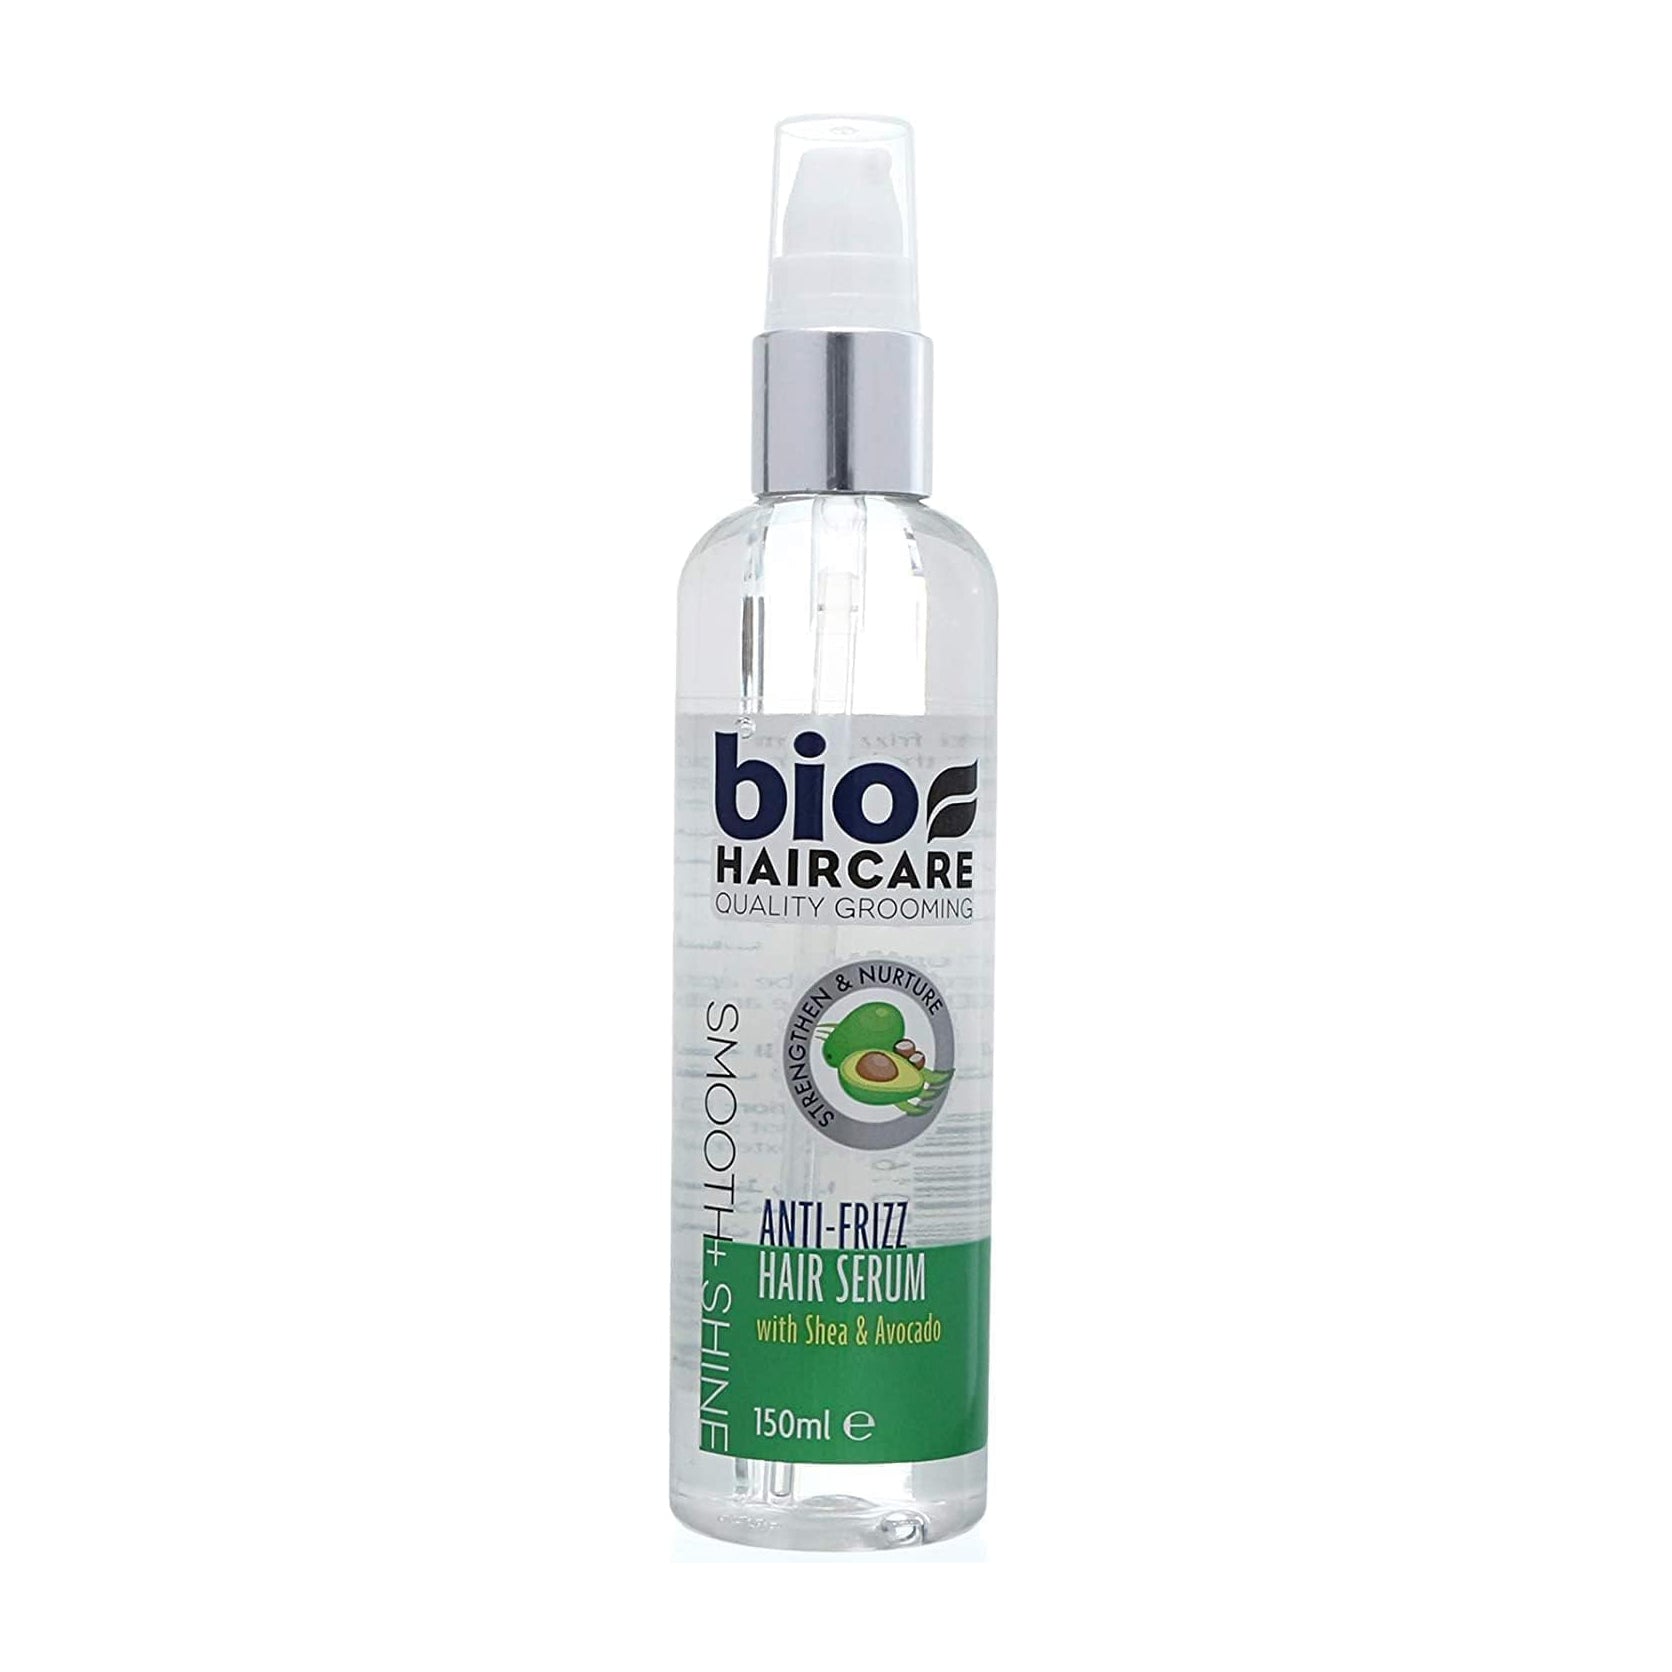 Bio Hair care Anti-Frizz Shea and Avocado Serum - Bloom Pharmacy